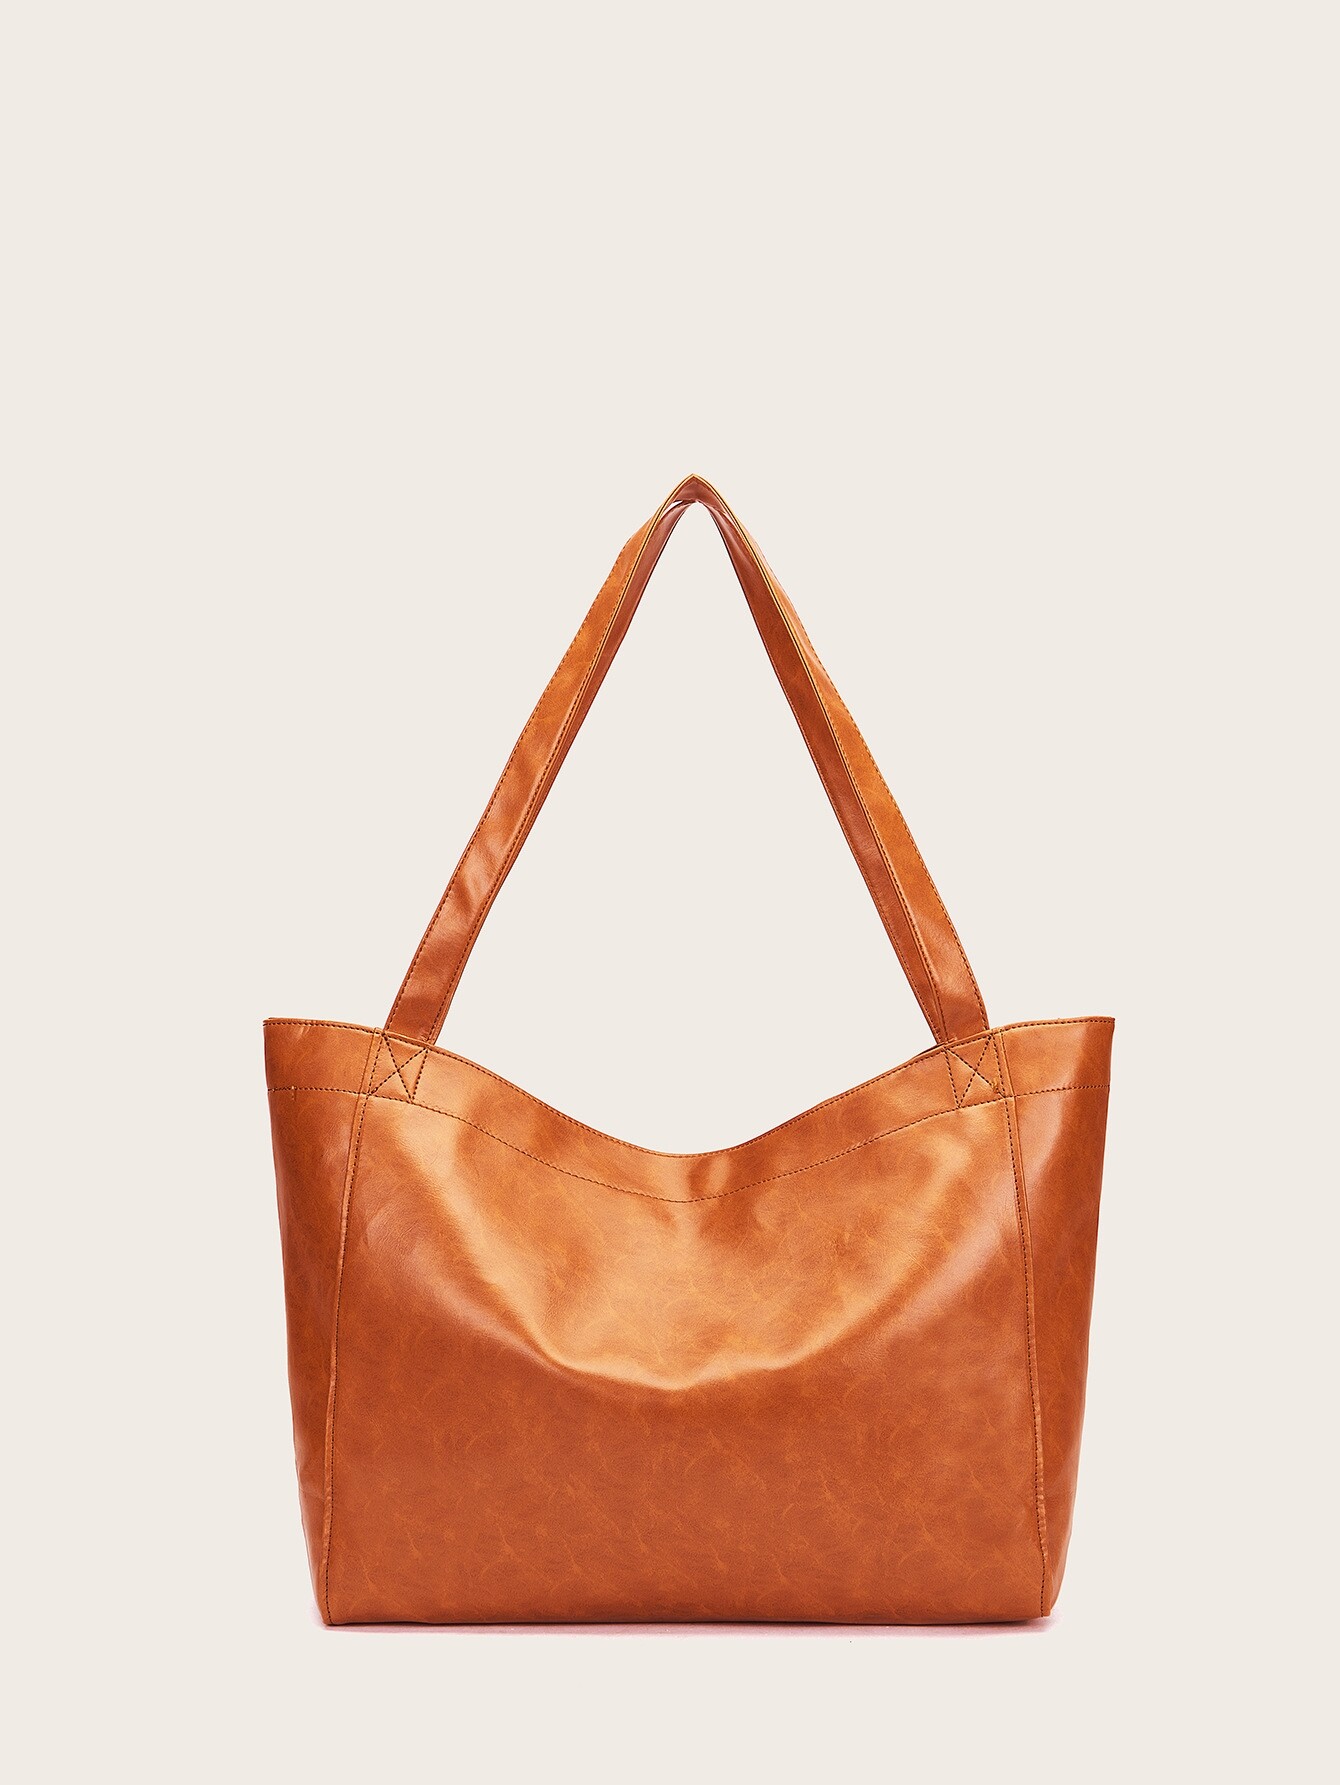 Glossy PU leather tote bag